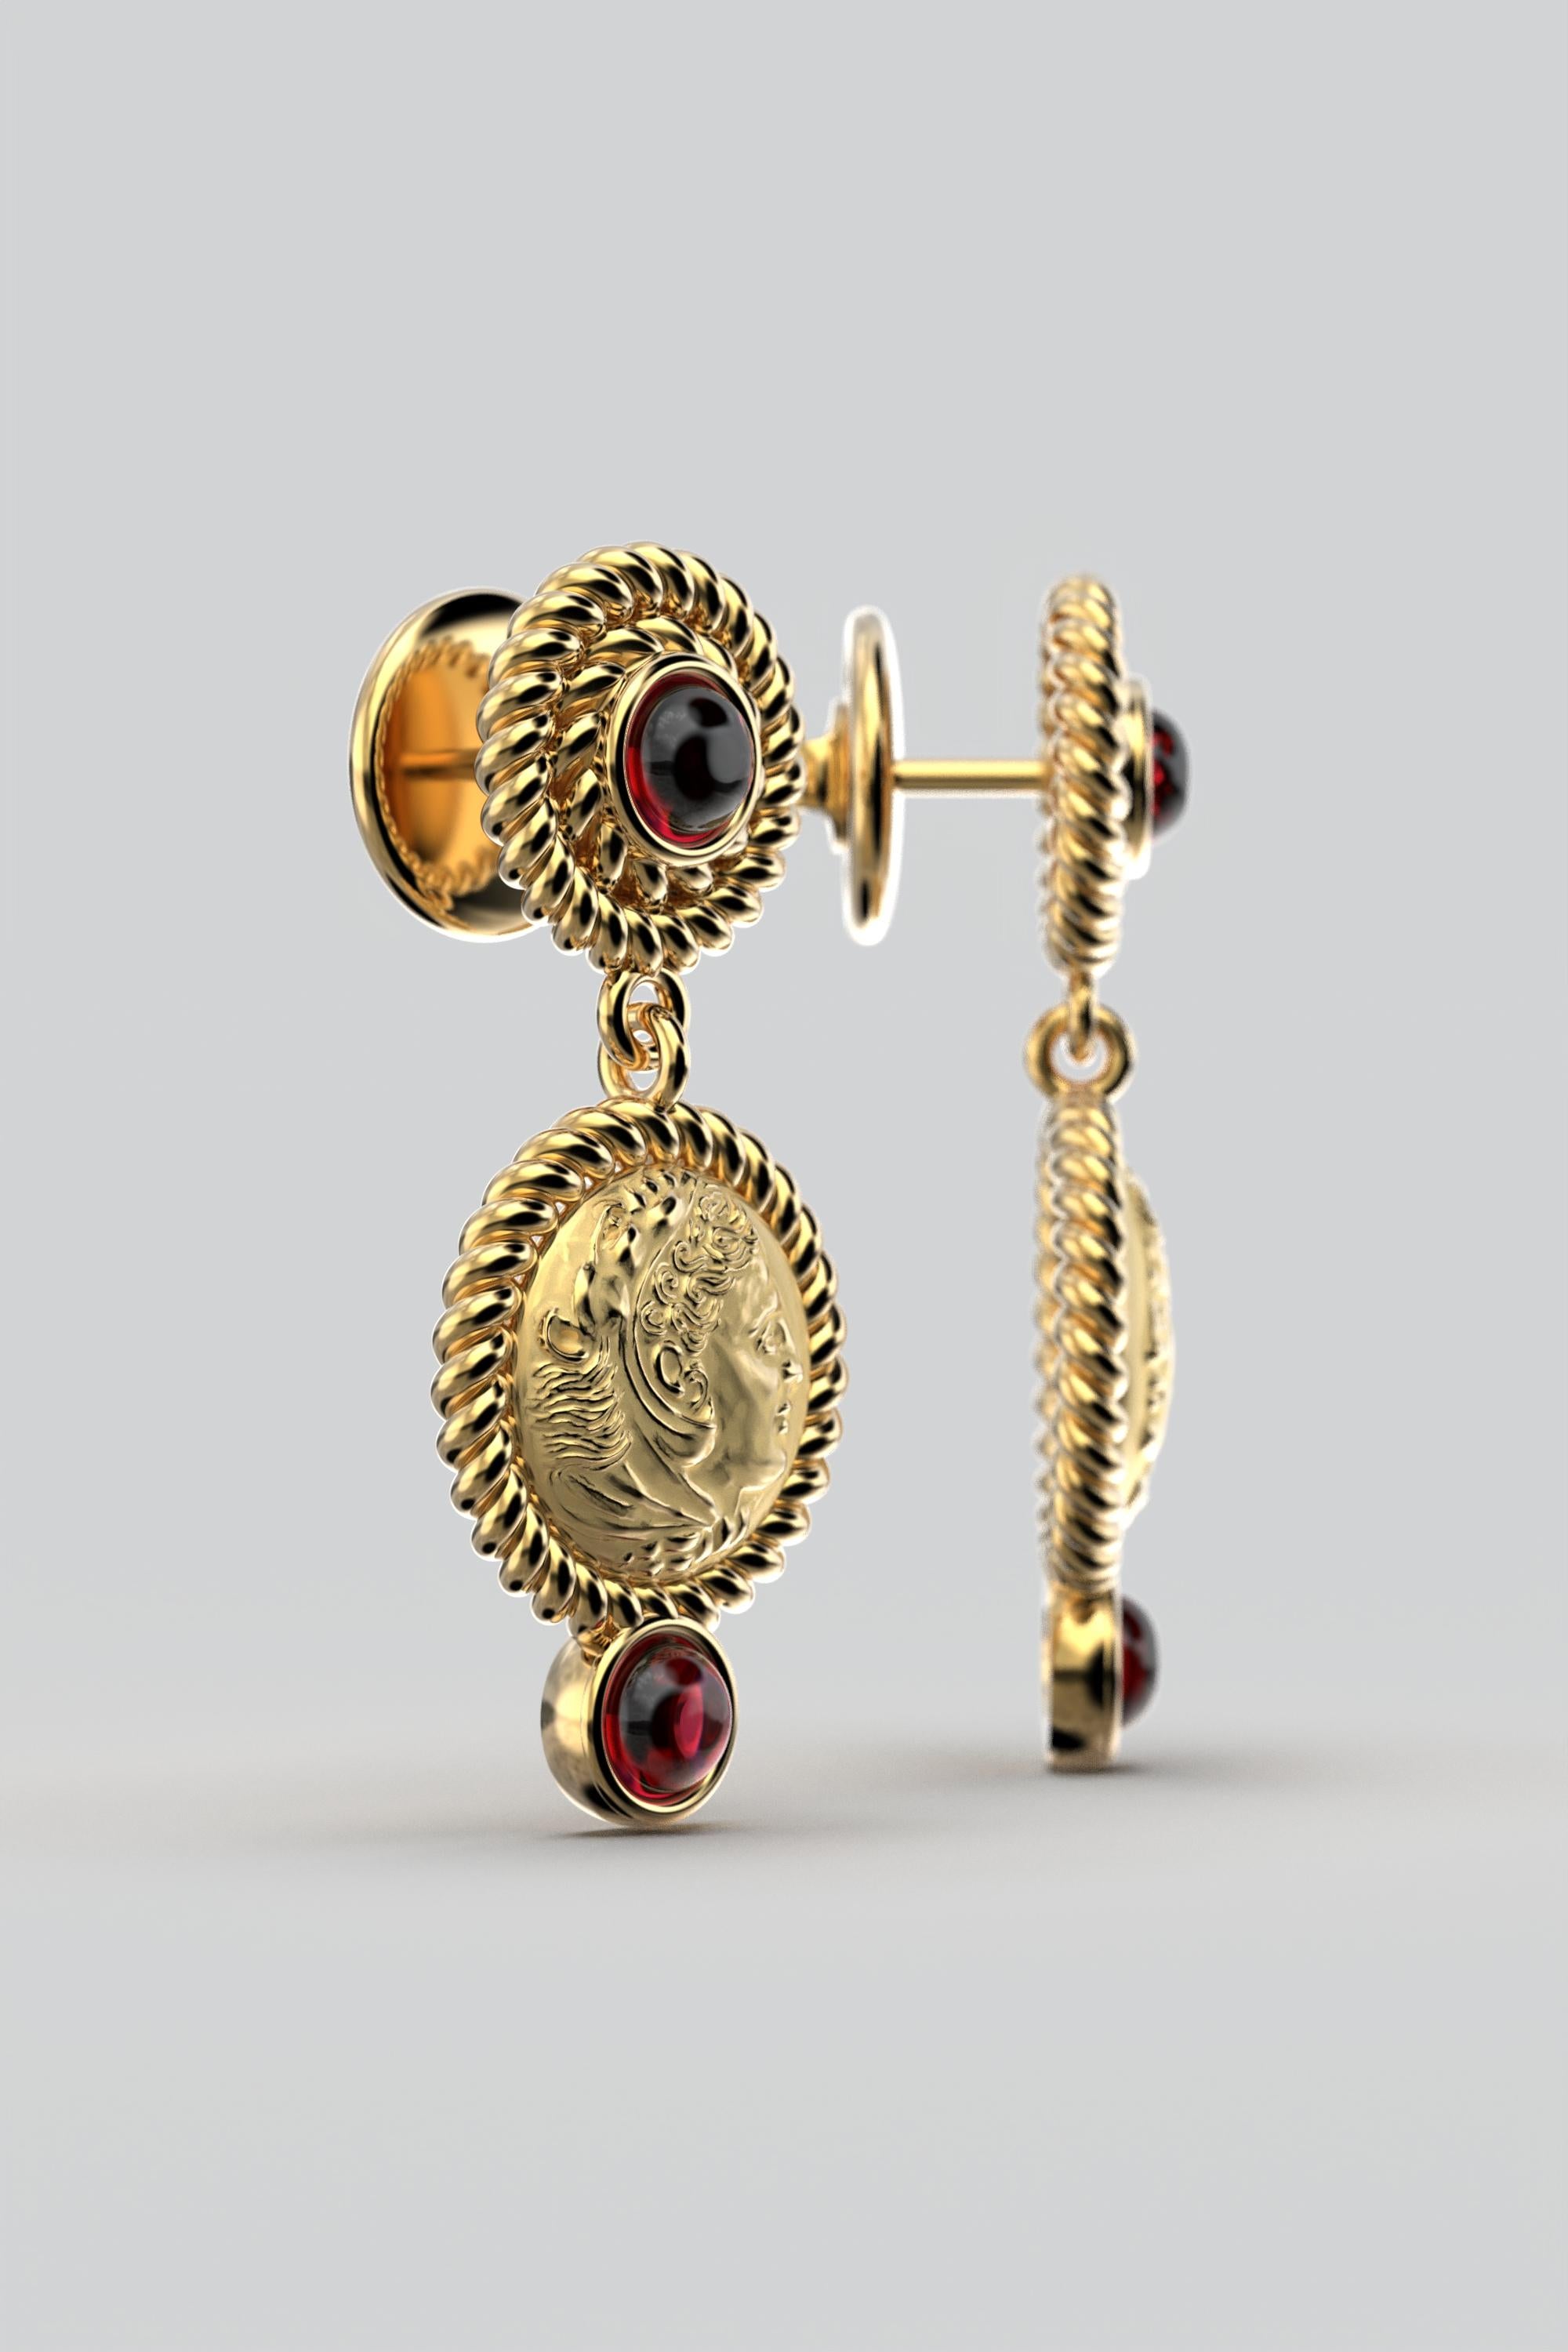 ancient italian jewelry